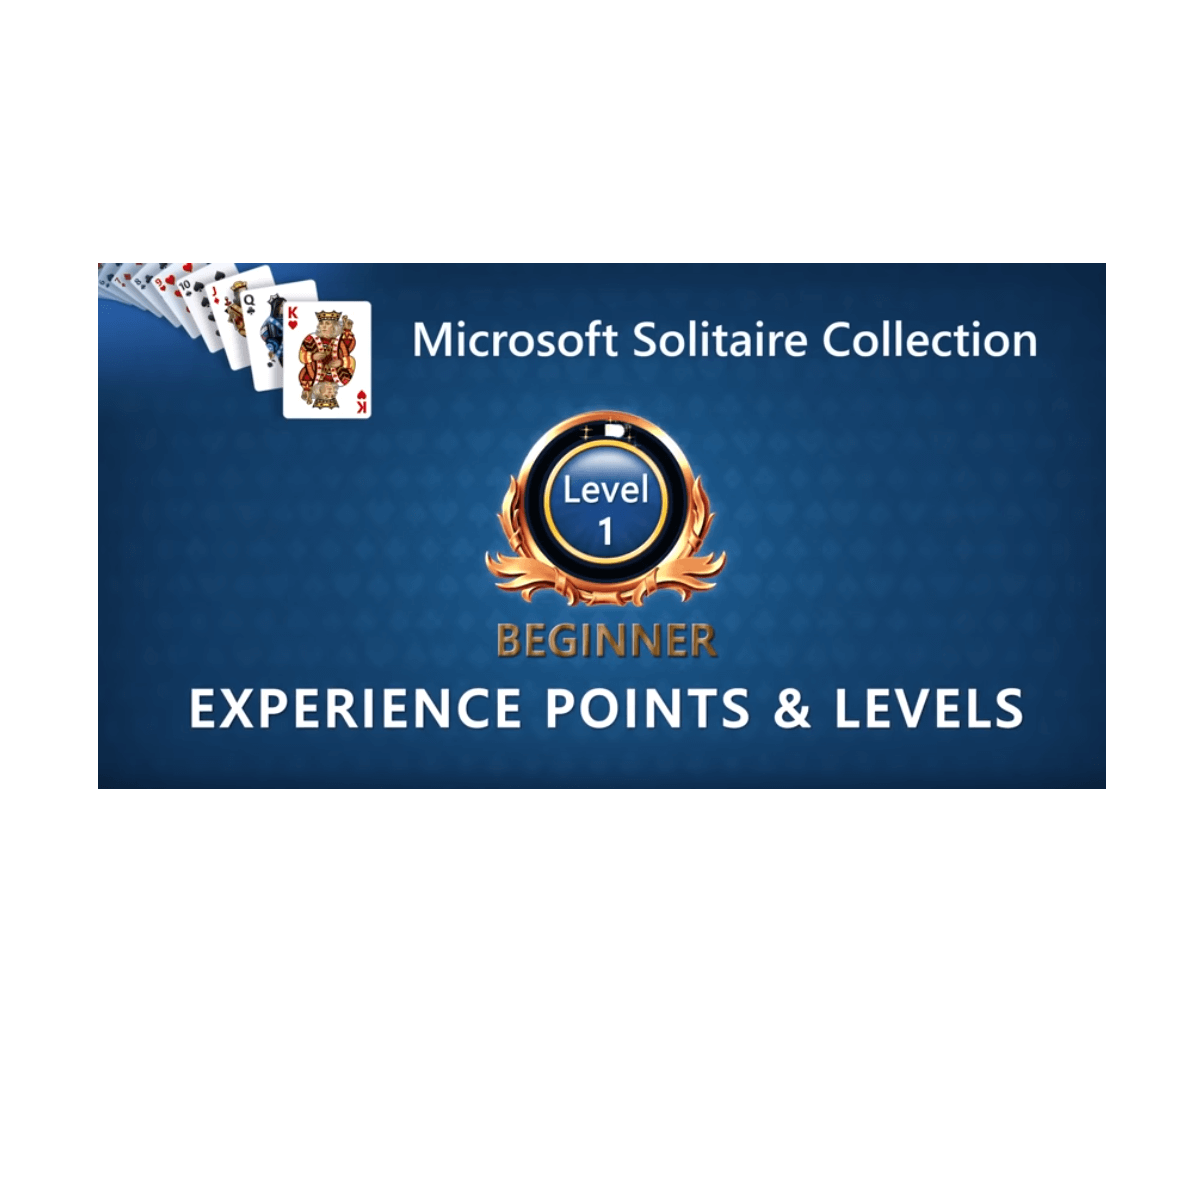 Microsoft Solitaire Collection (Windows) Achievements